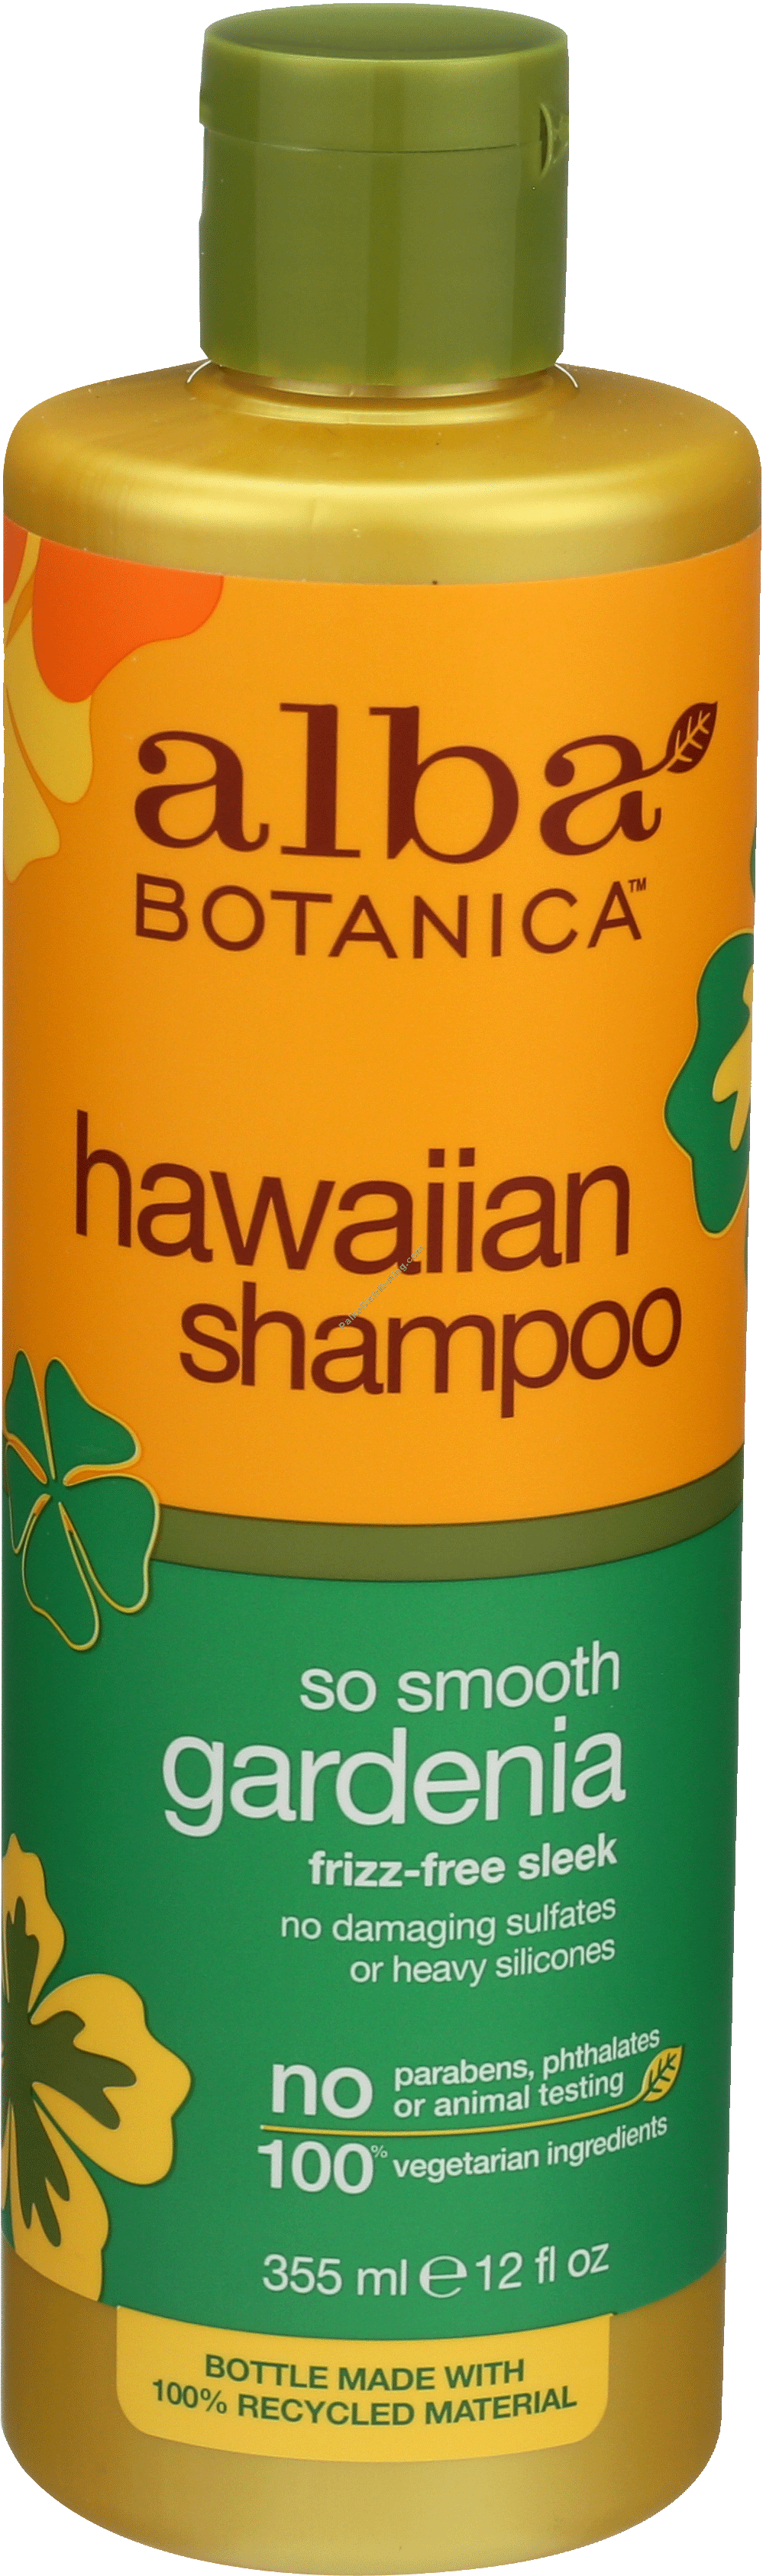 Product Image: Gardenia Hydrating Hair Wash